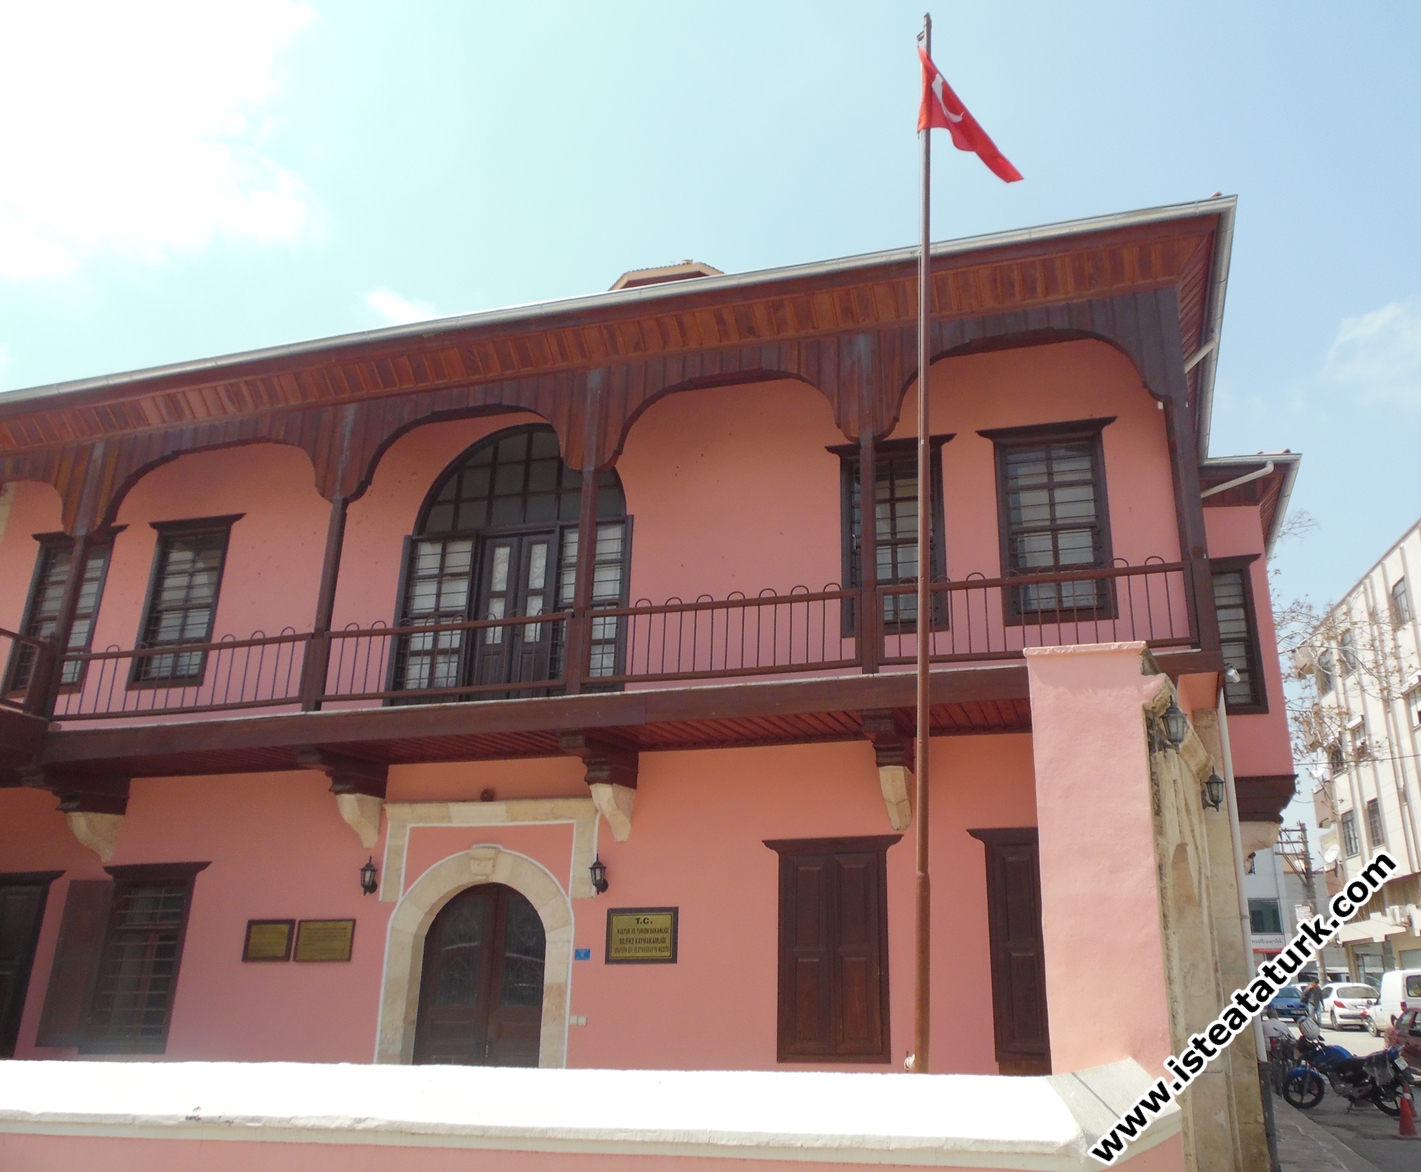 Silifke - Atatürk House